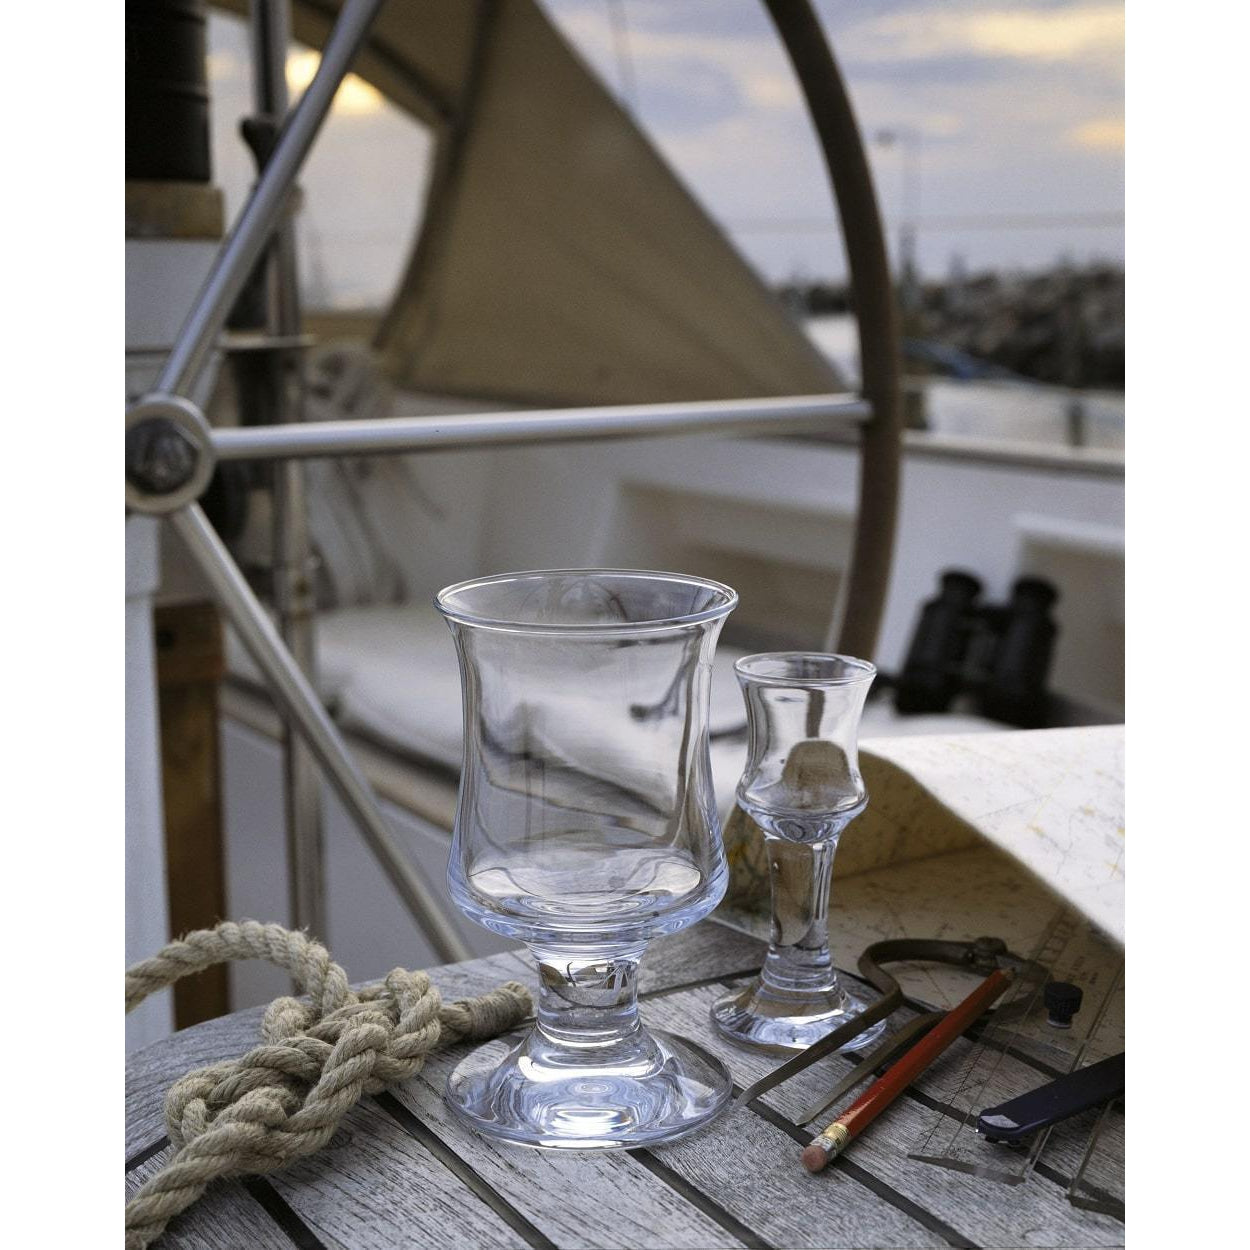 Holmegaard Charlotte Amalie White Wine Glass